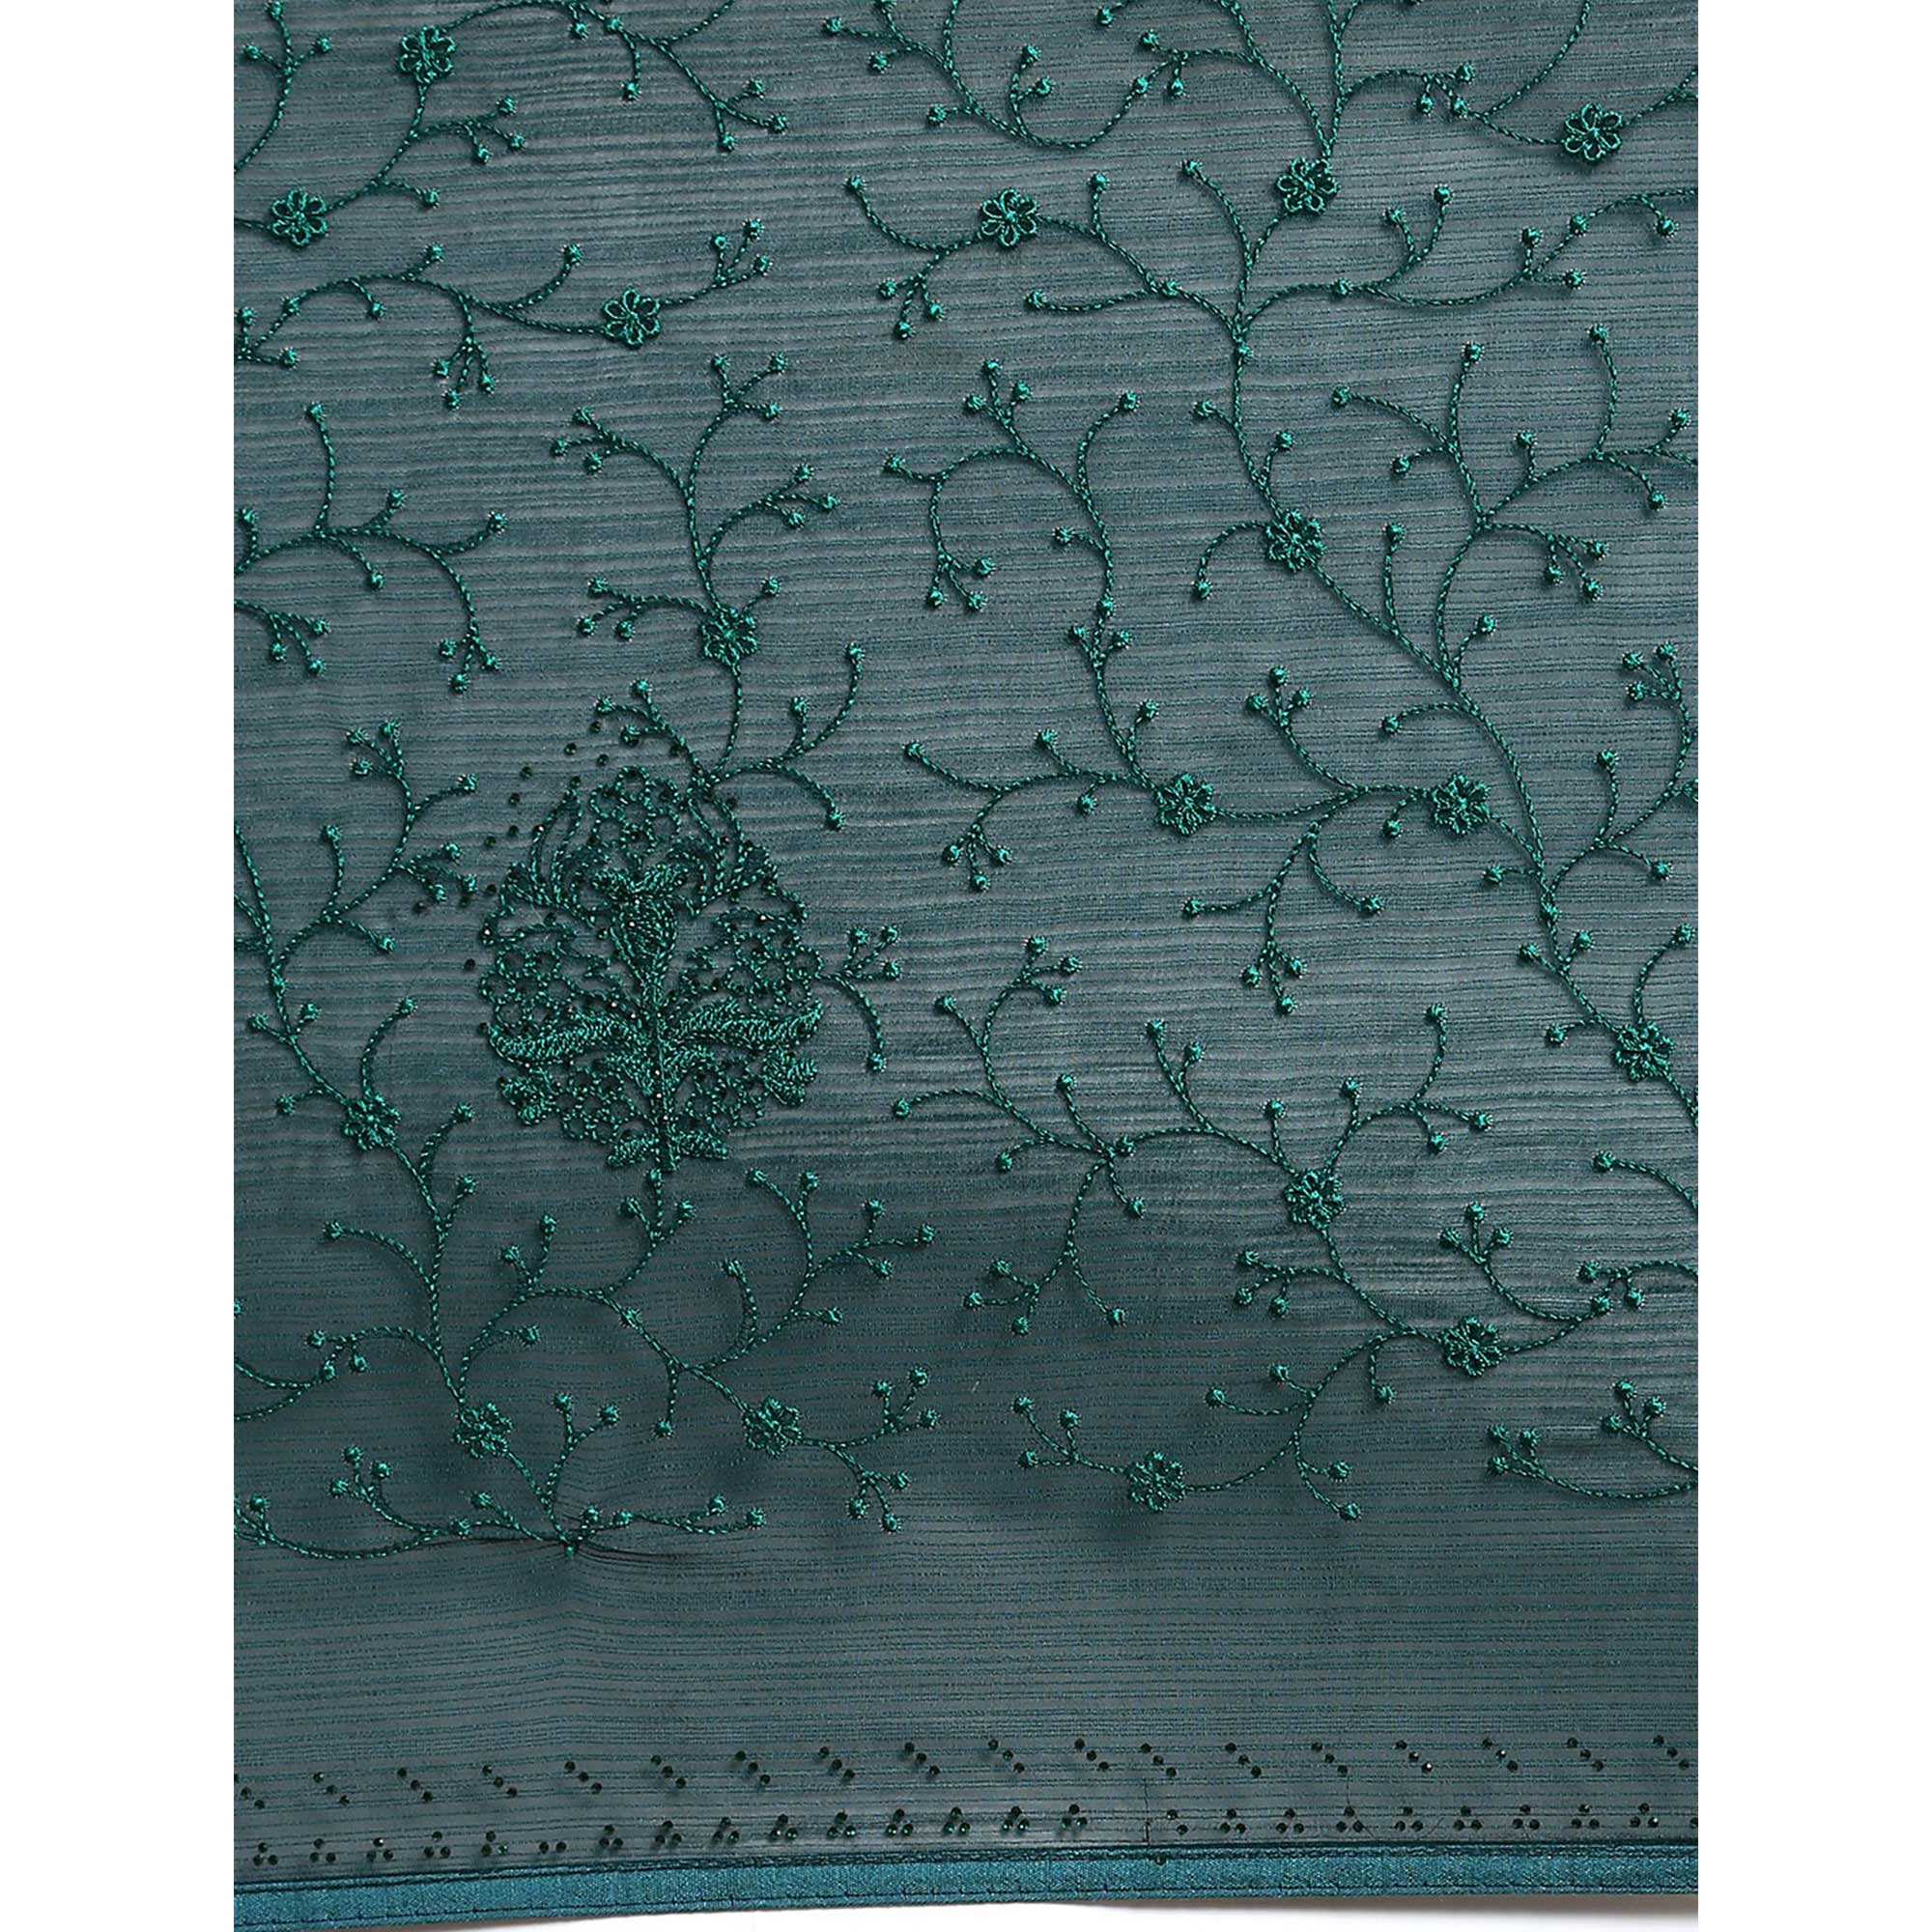 Green Floral Embroidered Zomato Silk Saree